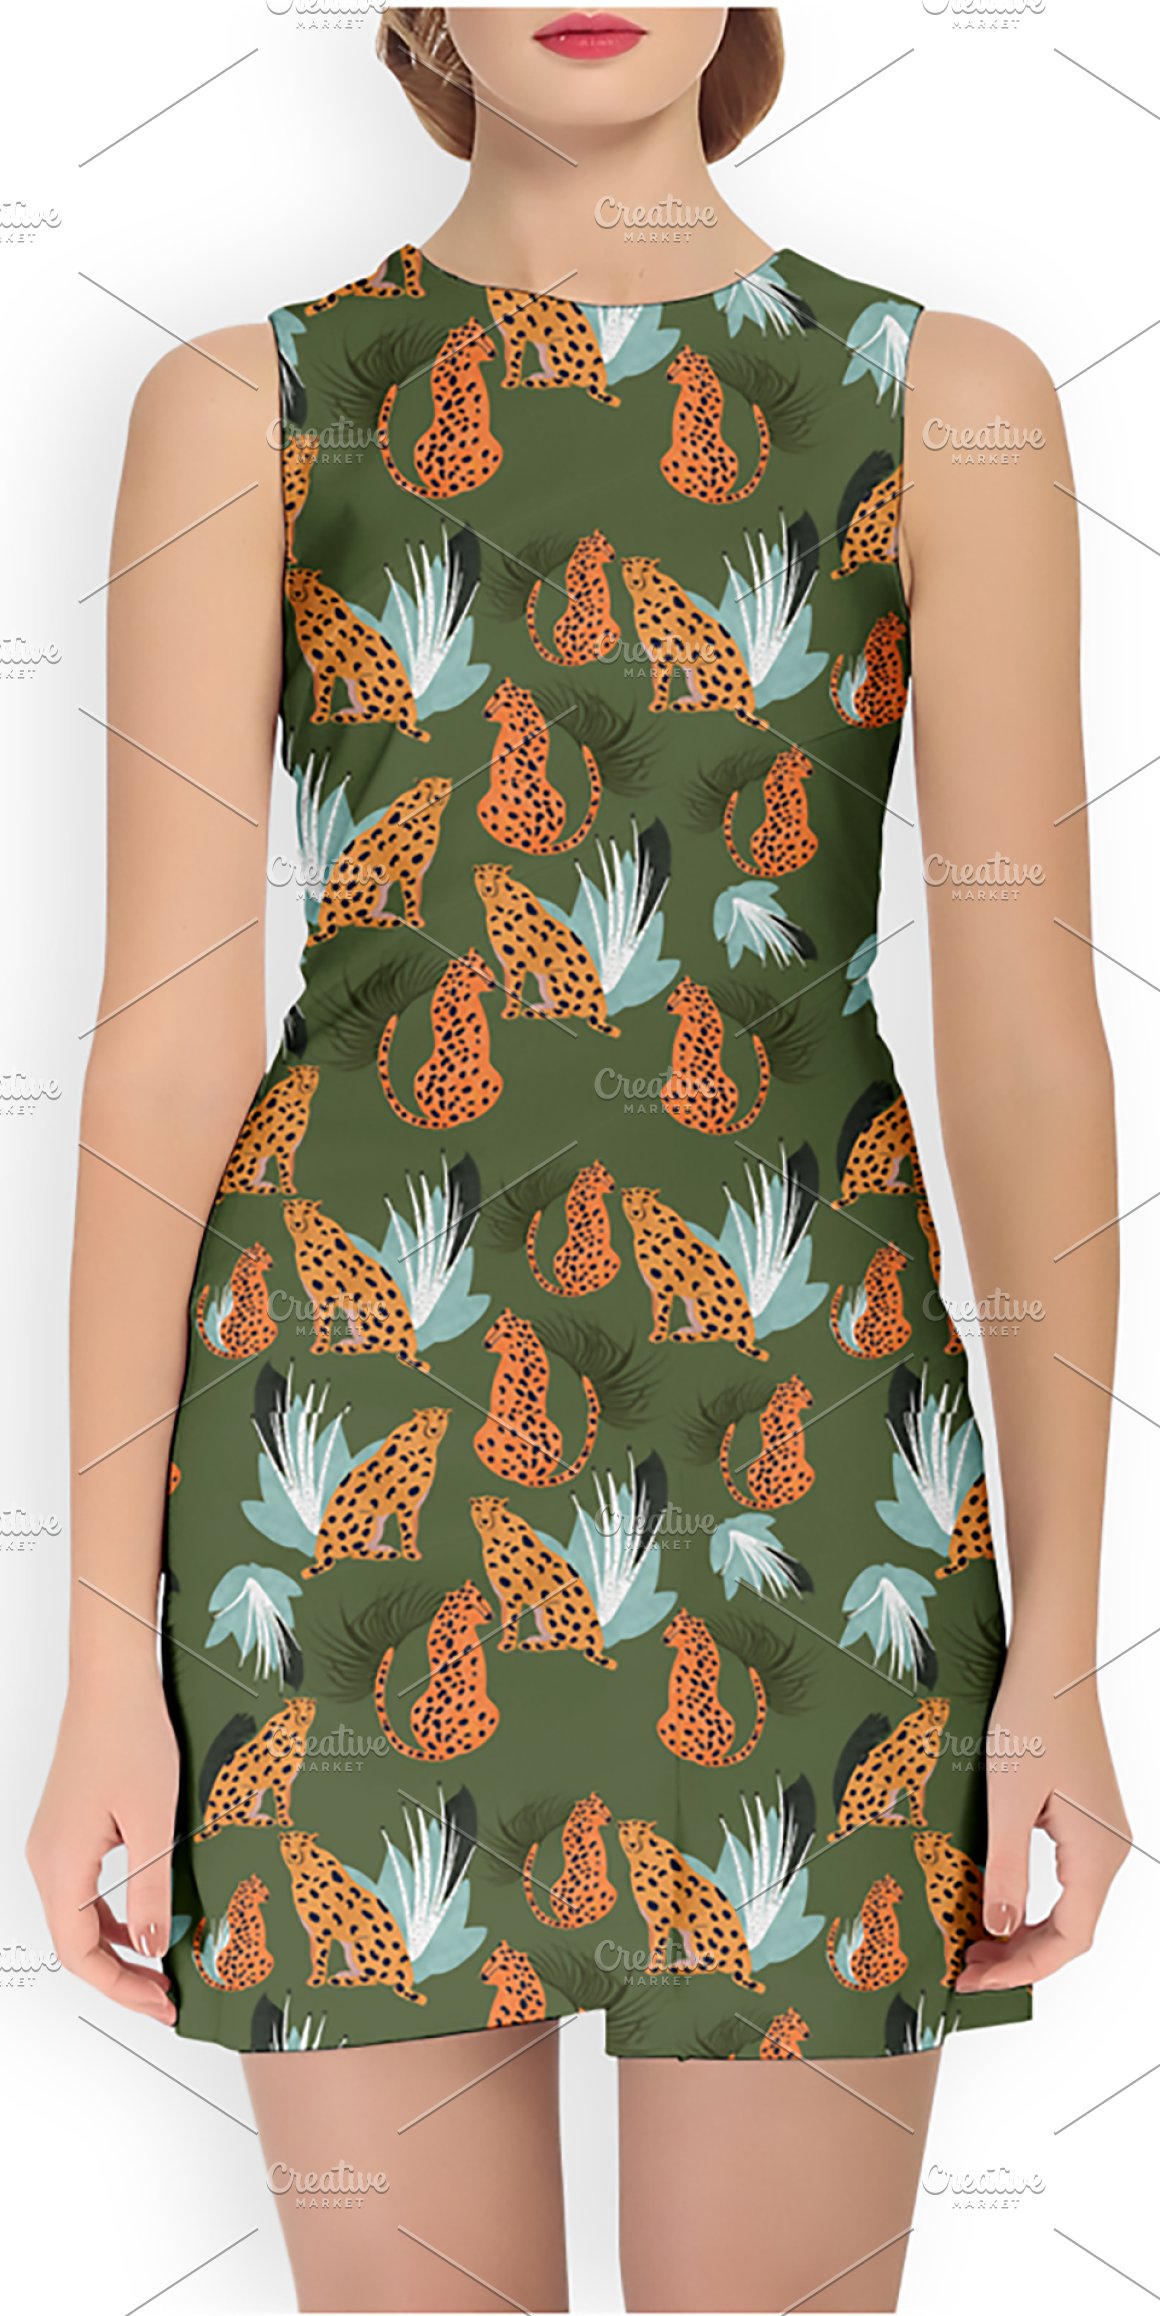 Mini dress in a tropical print.